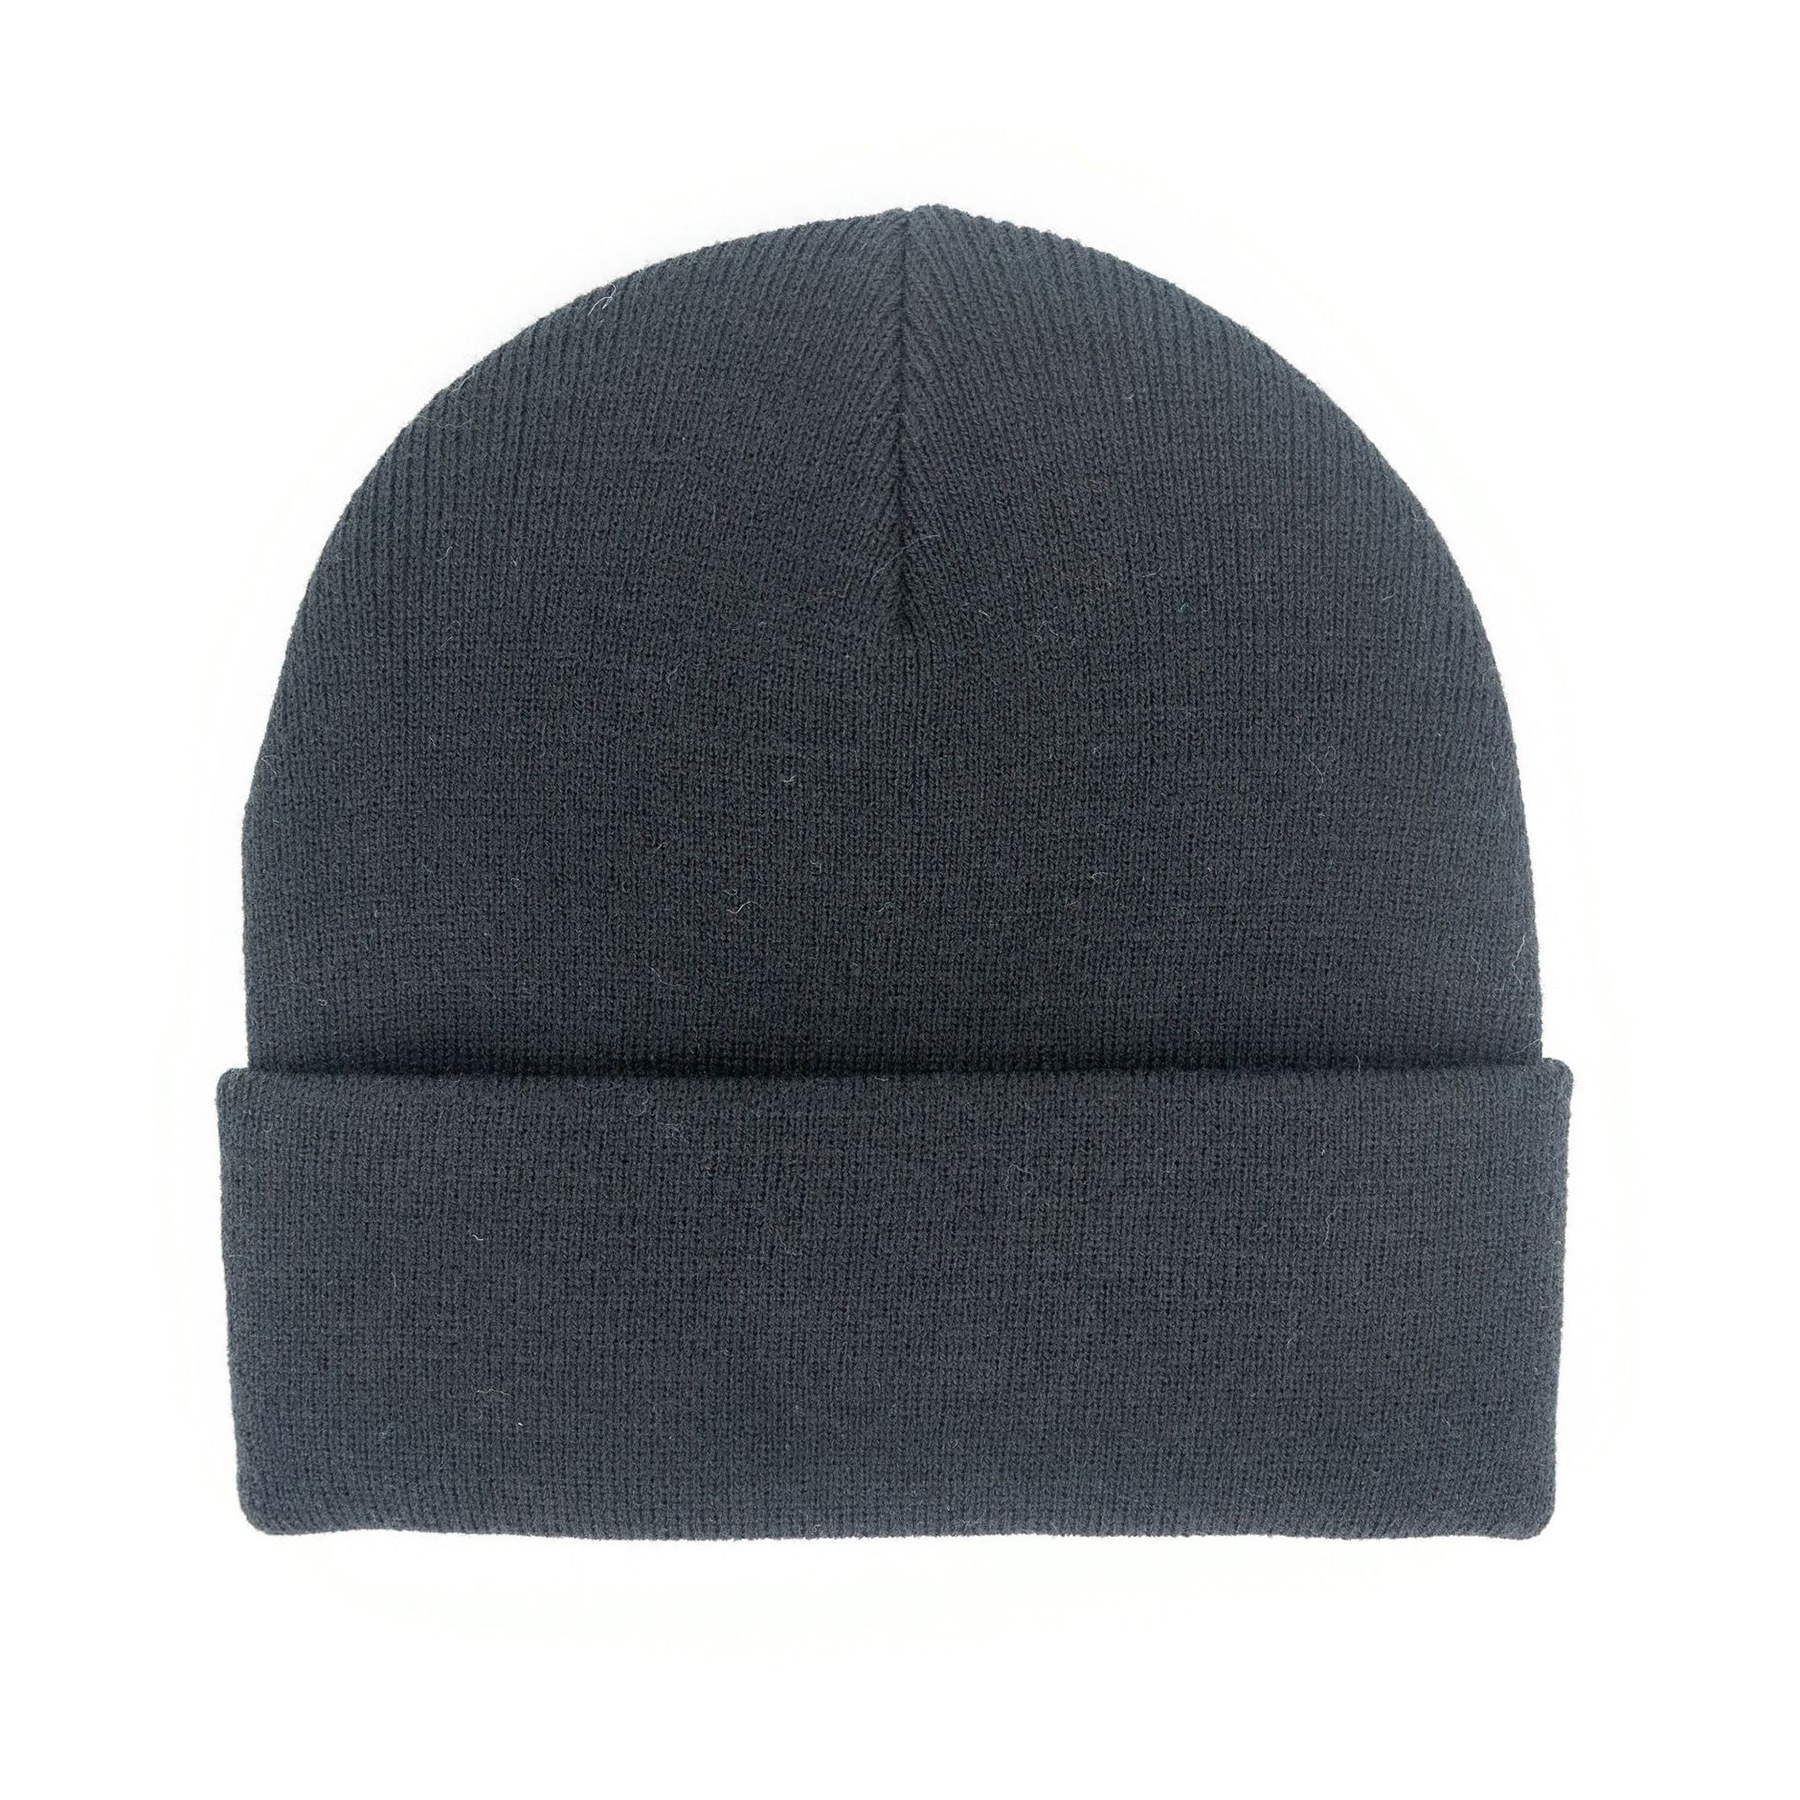  Knit Beanie Hat for Men/Women